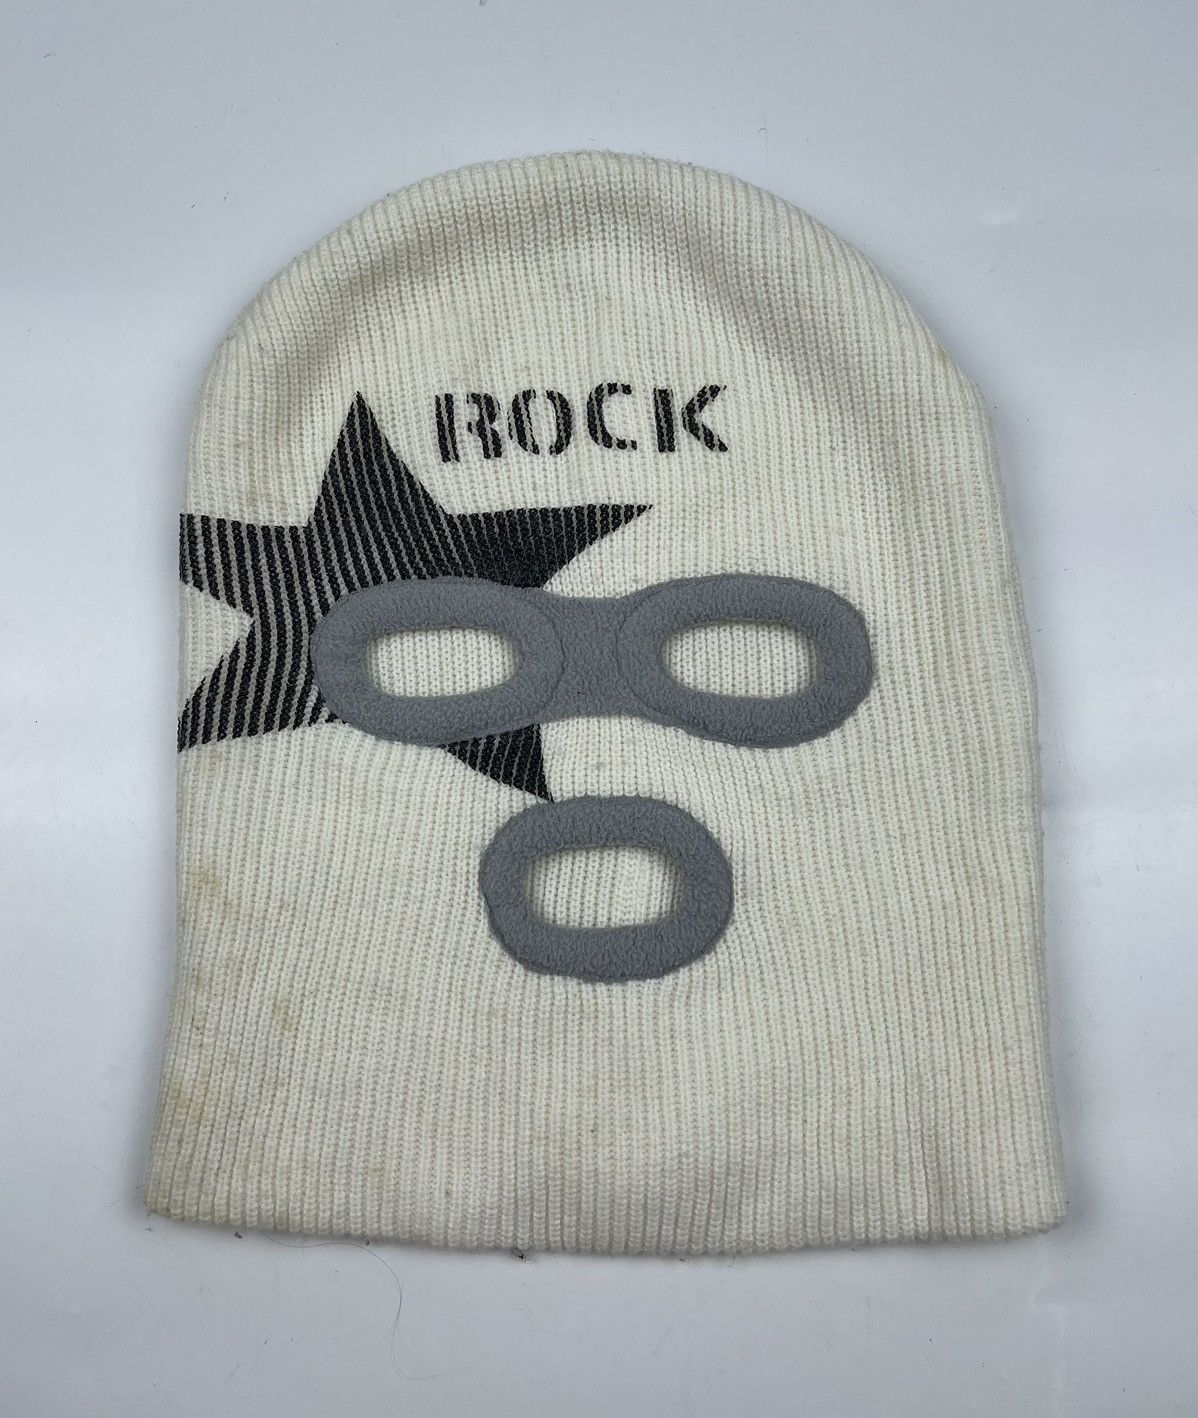 Japanese Brand - rock balaclava ski mask tc14 - 3